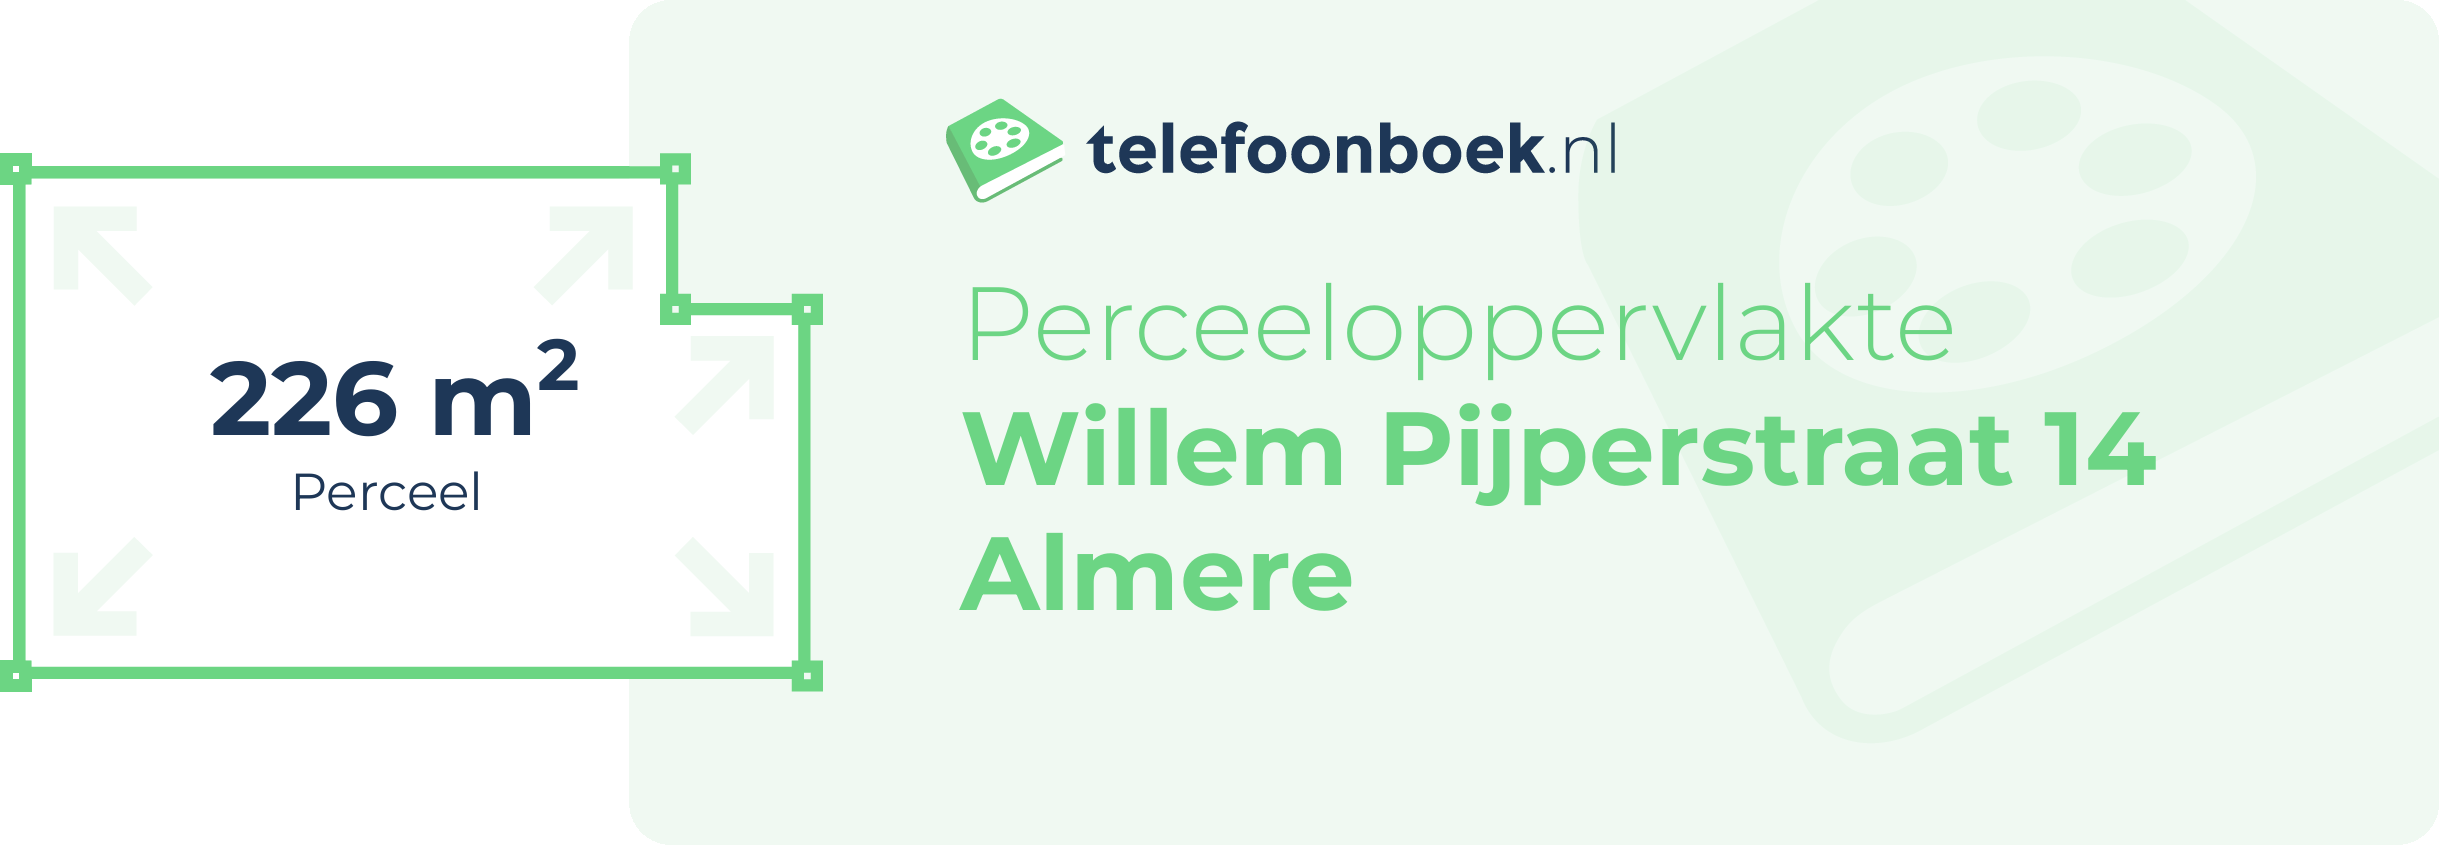 Perceeloppervlakte Willem Pijperstraat 14 Almere